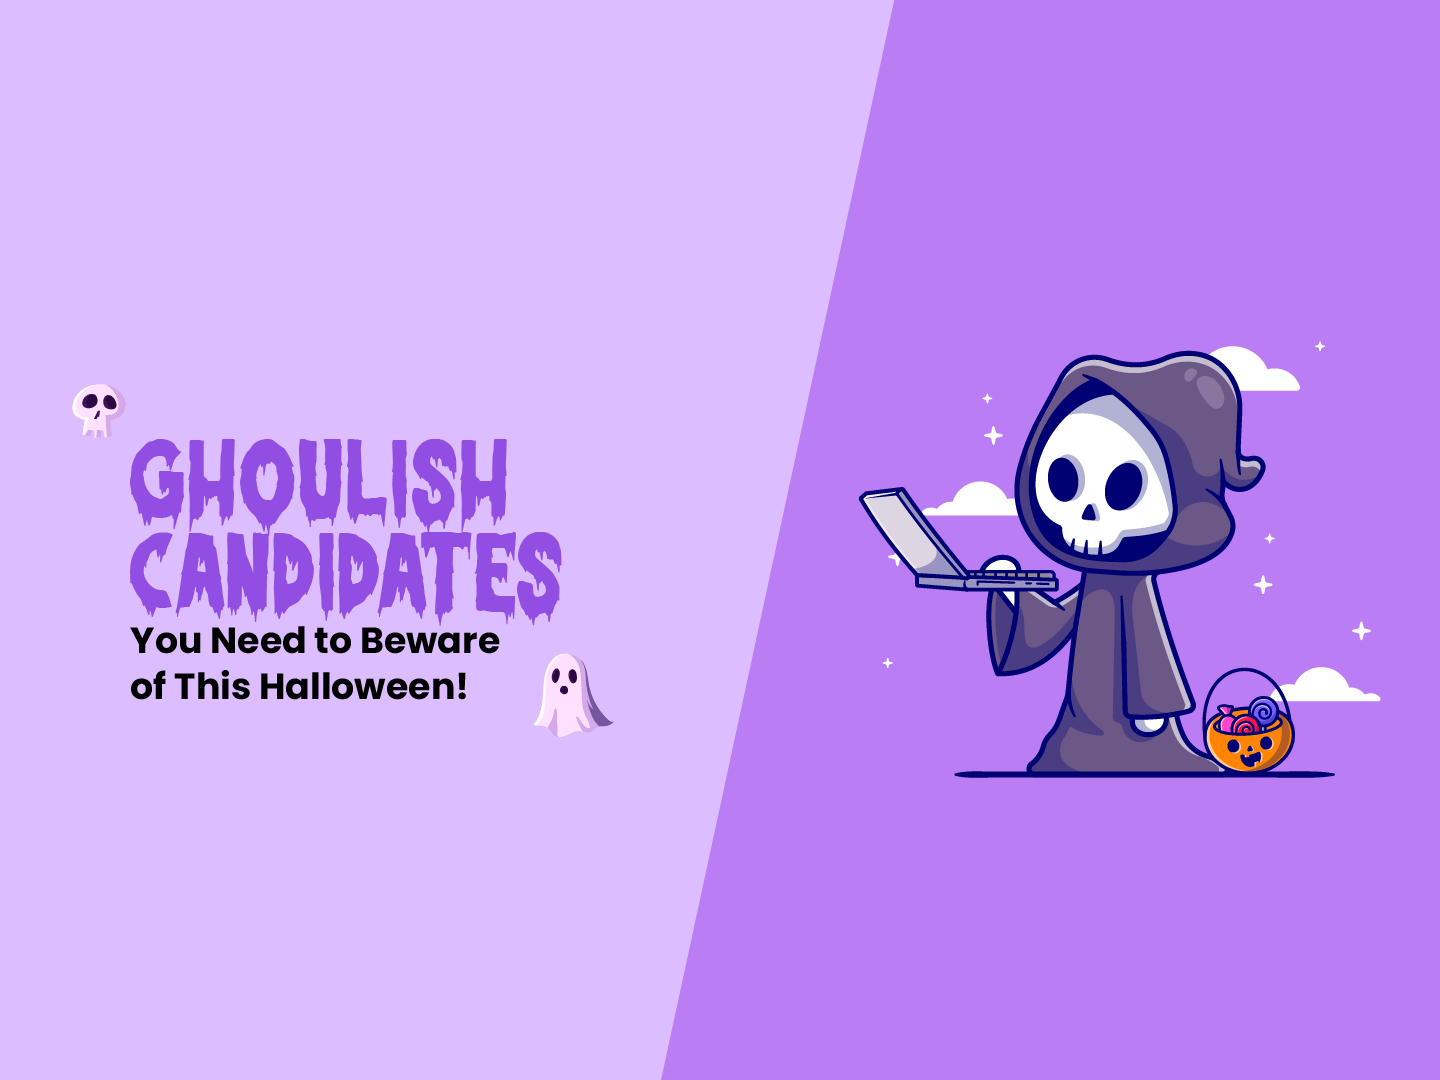 Ghoulish Candidates